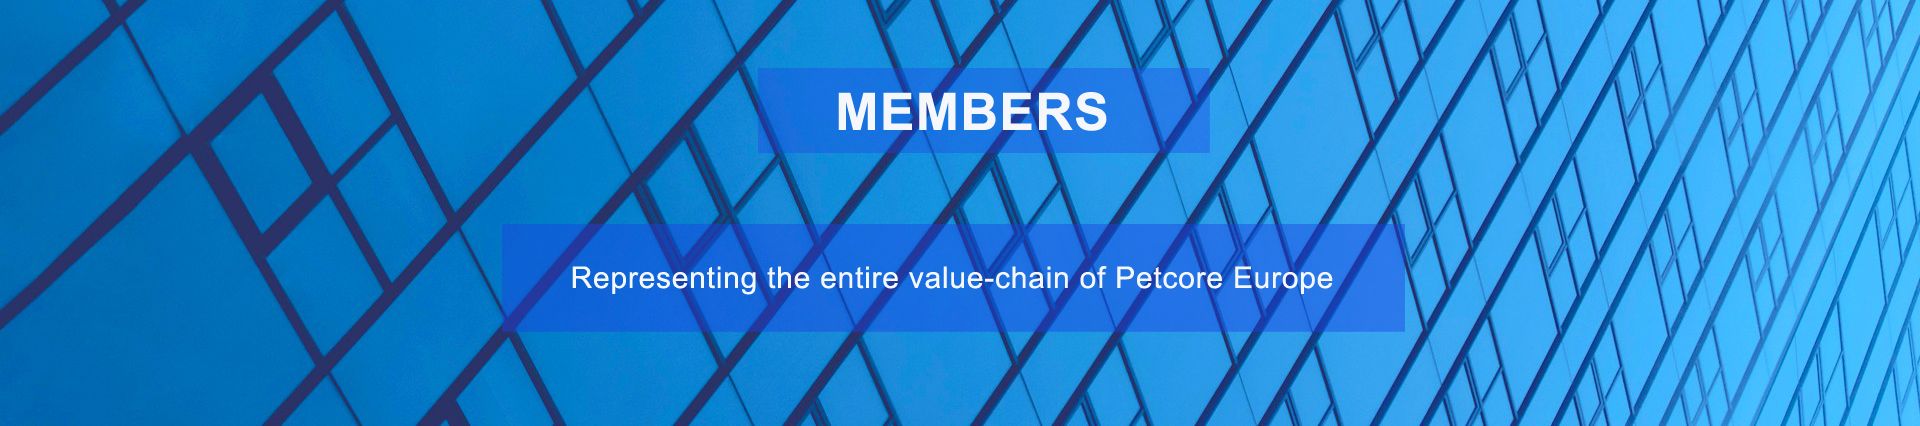 Petcore Europe Members